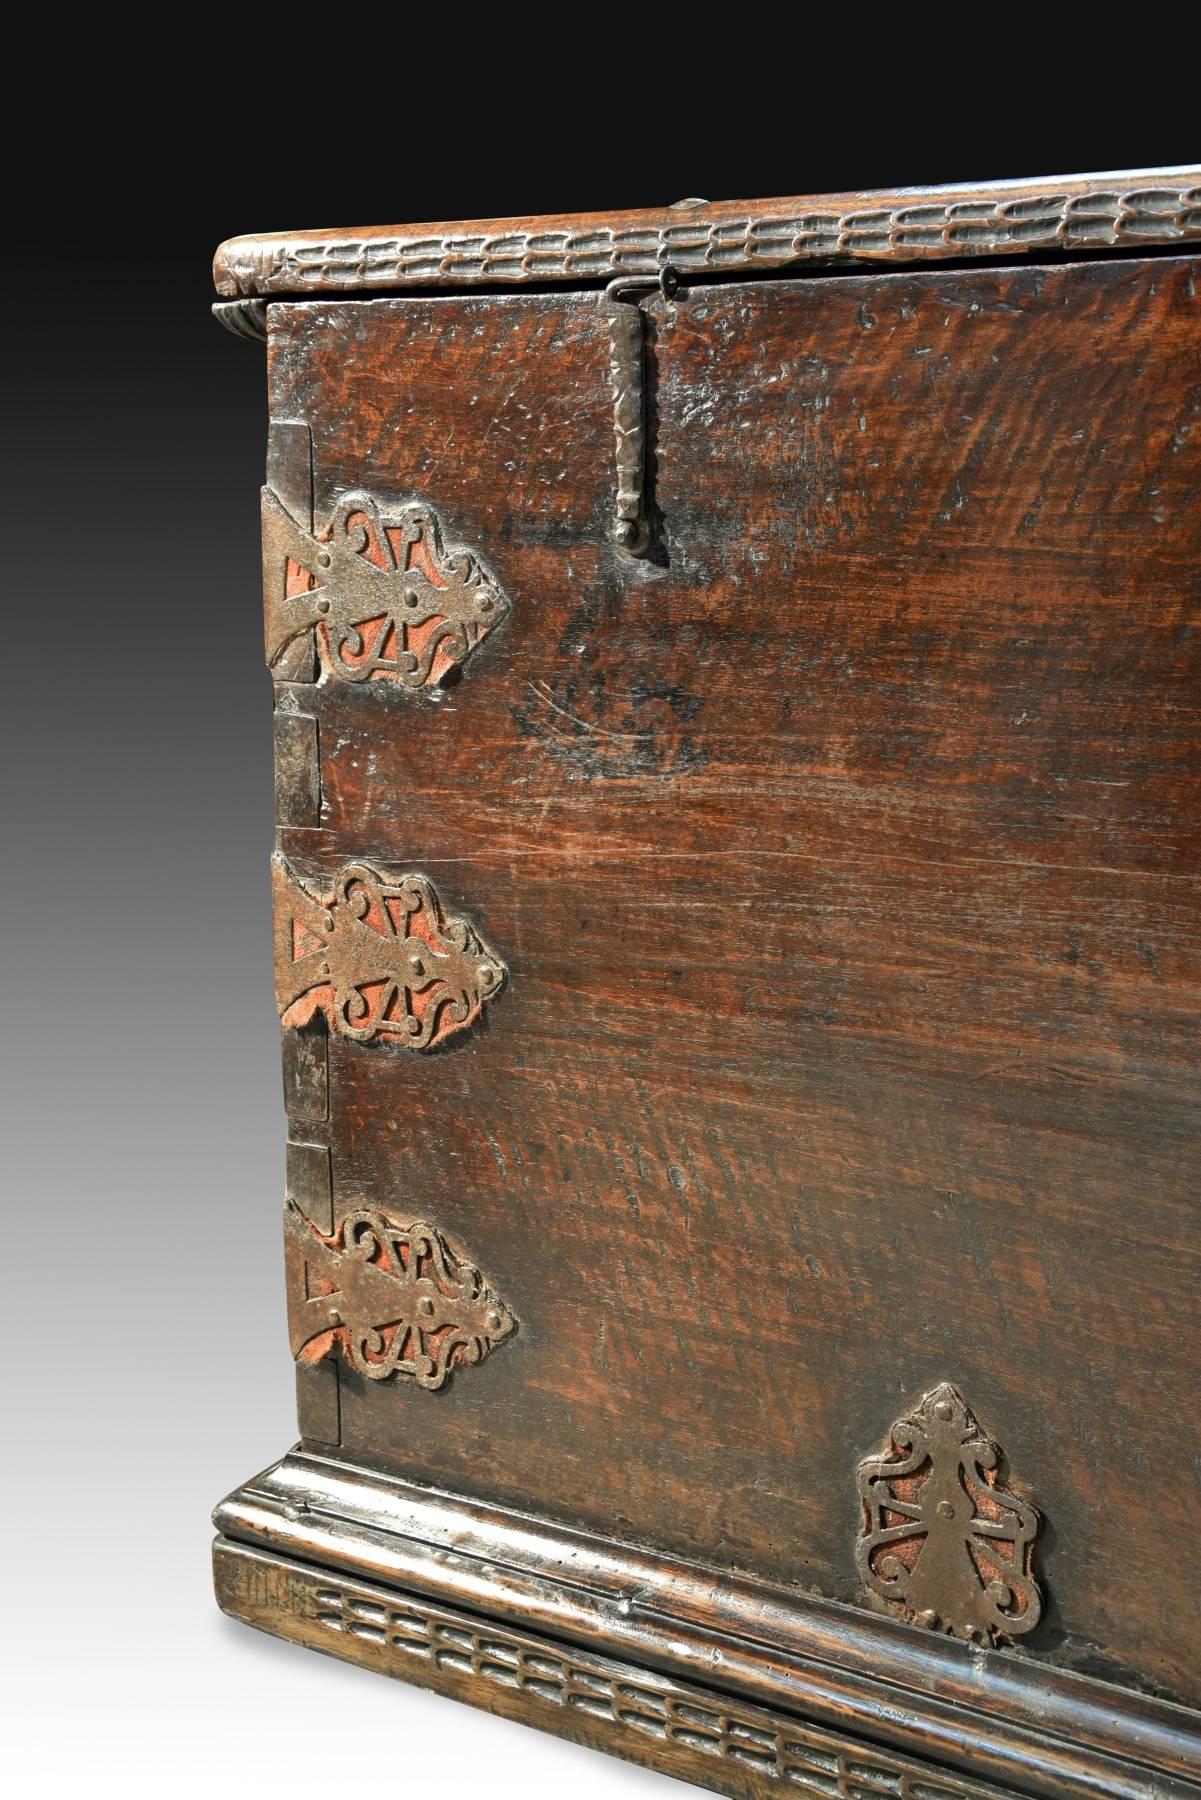 Spanish Chest, Walnut, Wrought Iron Fittings, Castille, Spain, 17th Century